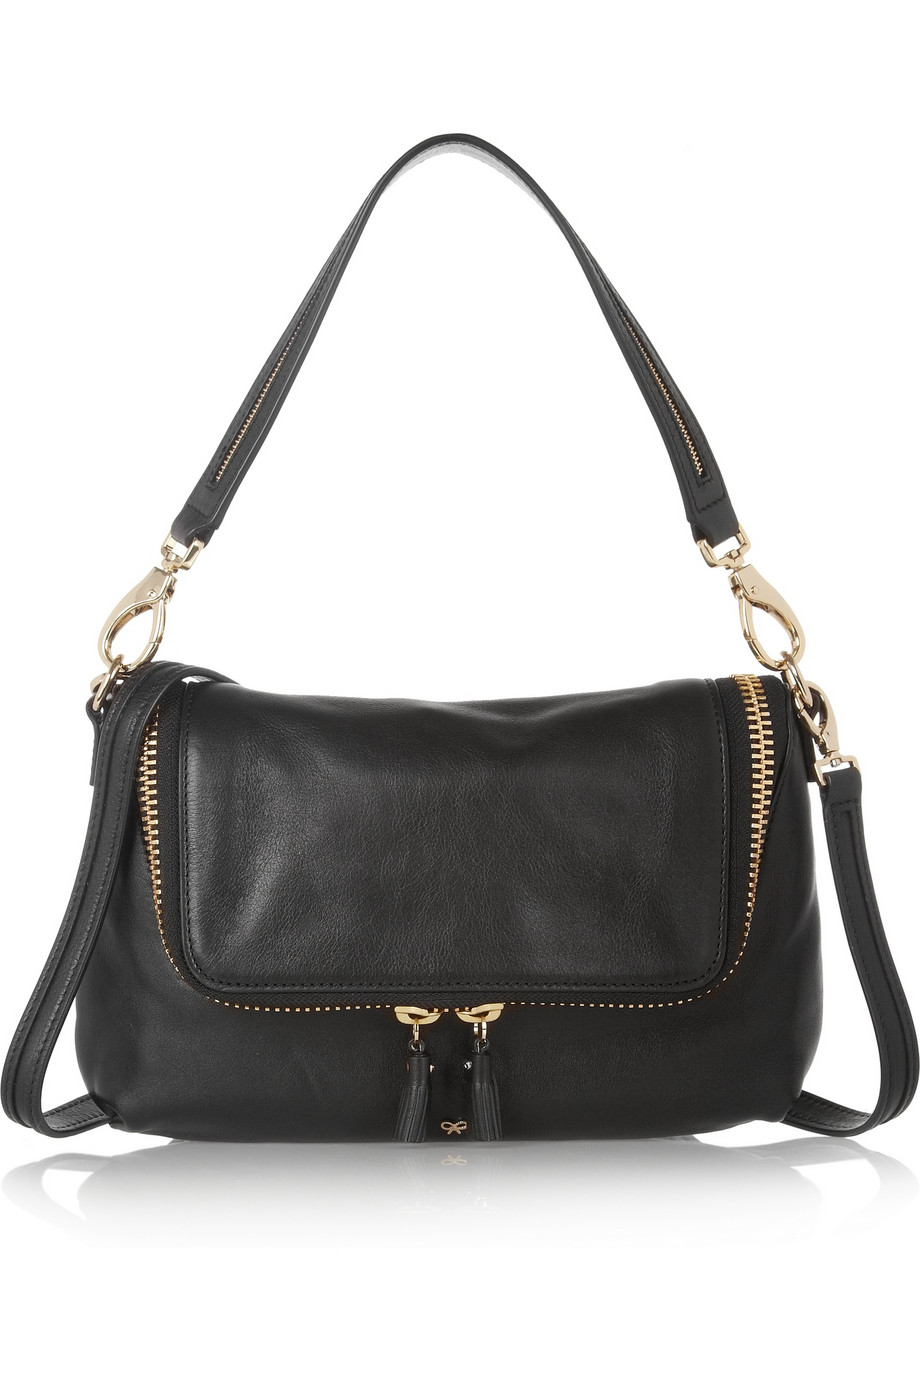 Anya hindmarch Maxi Zip Crossbody Leather Shoulder Bag in Black | Lyst